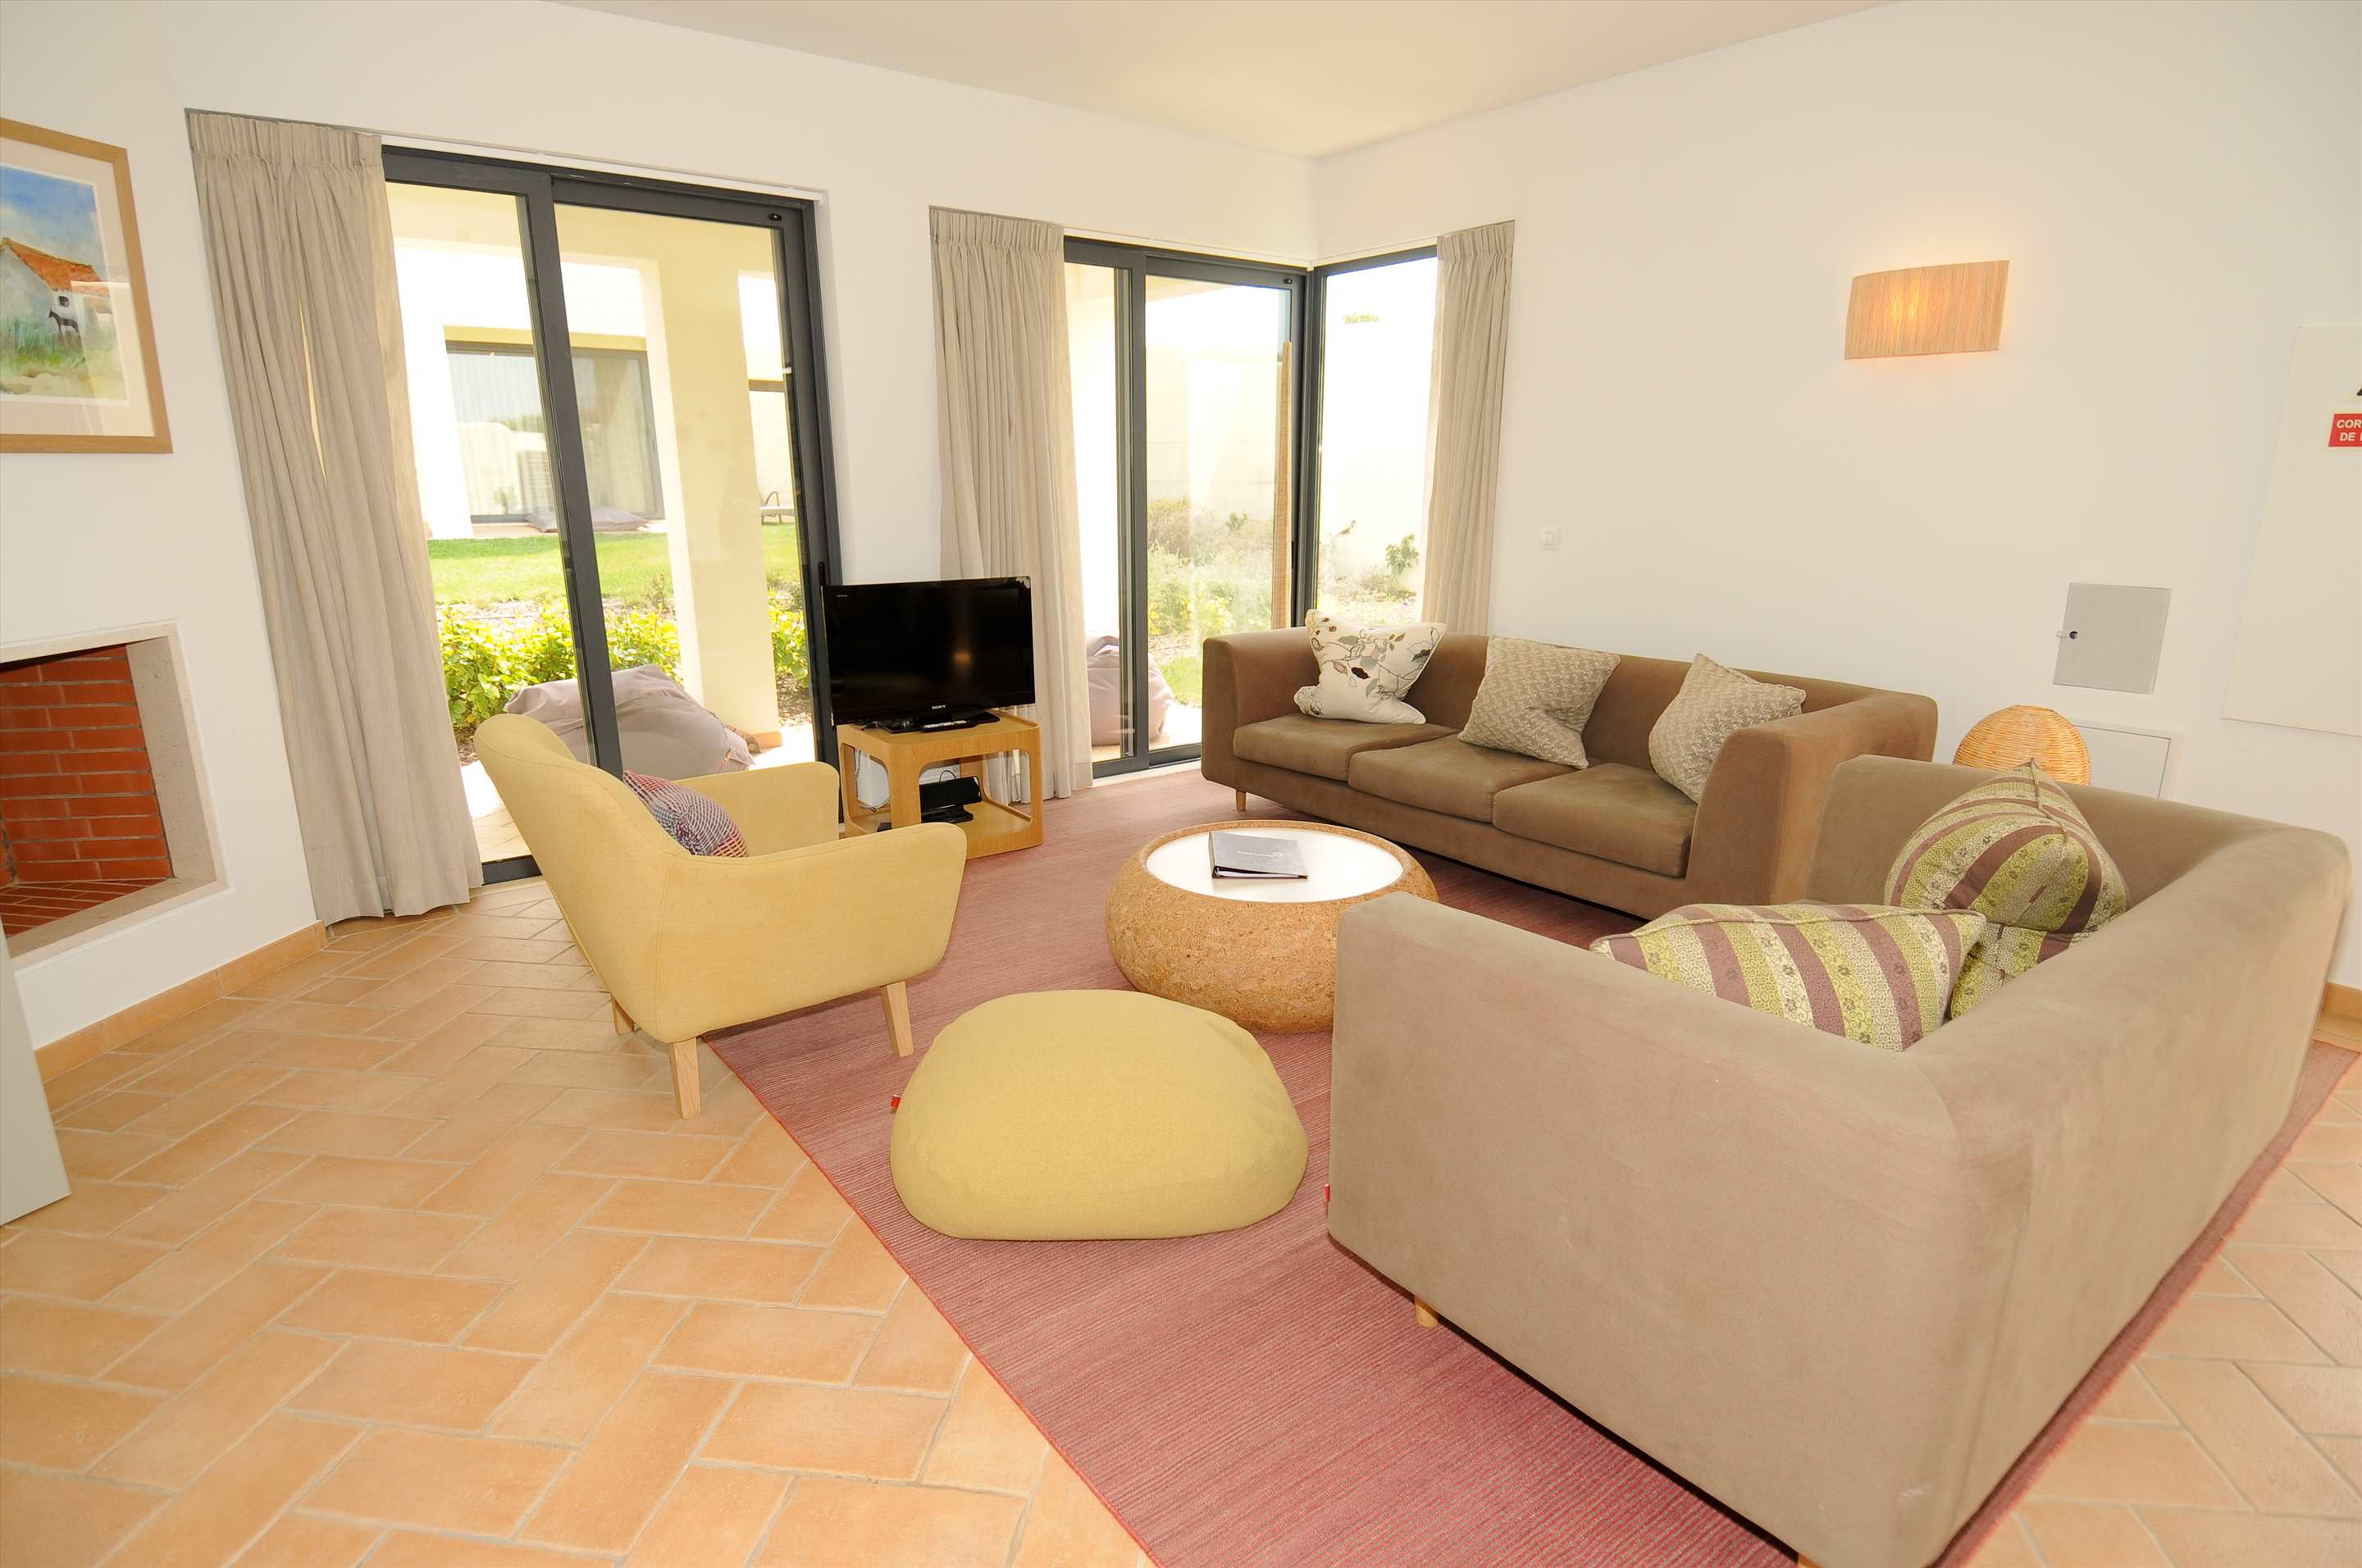 Martinhal Village Garden House, Deluxe One Bedroom Apartment, 1 bedroom villa in Martinhal Sagres, Algarve